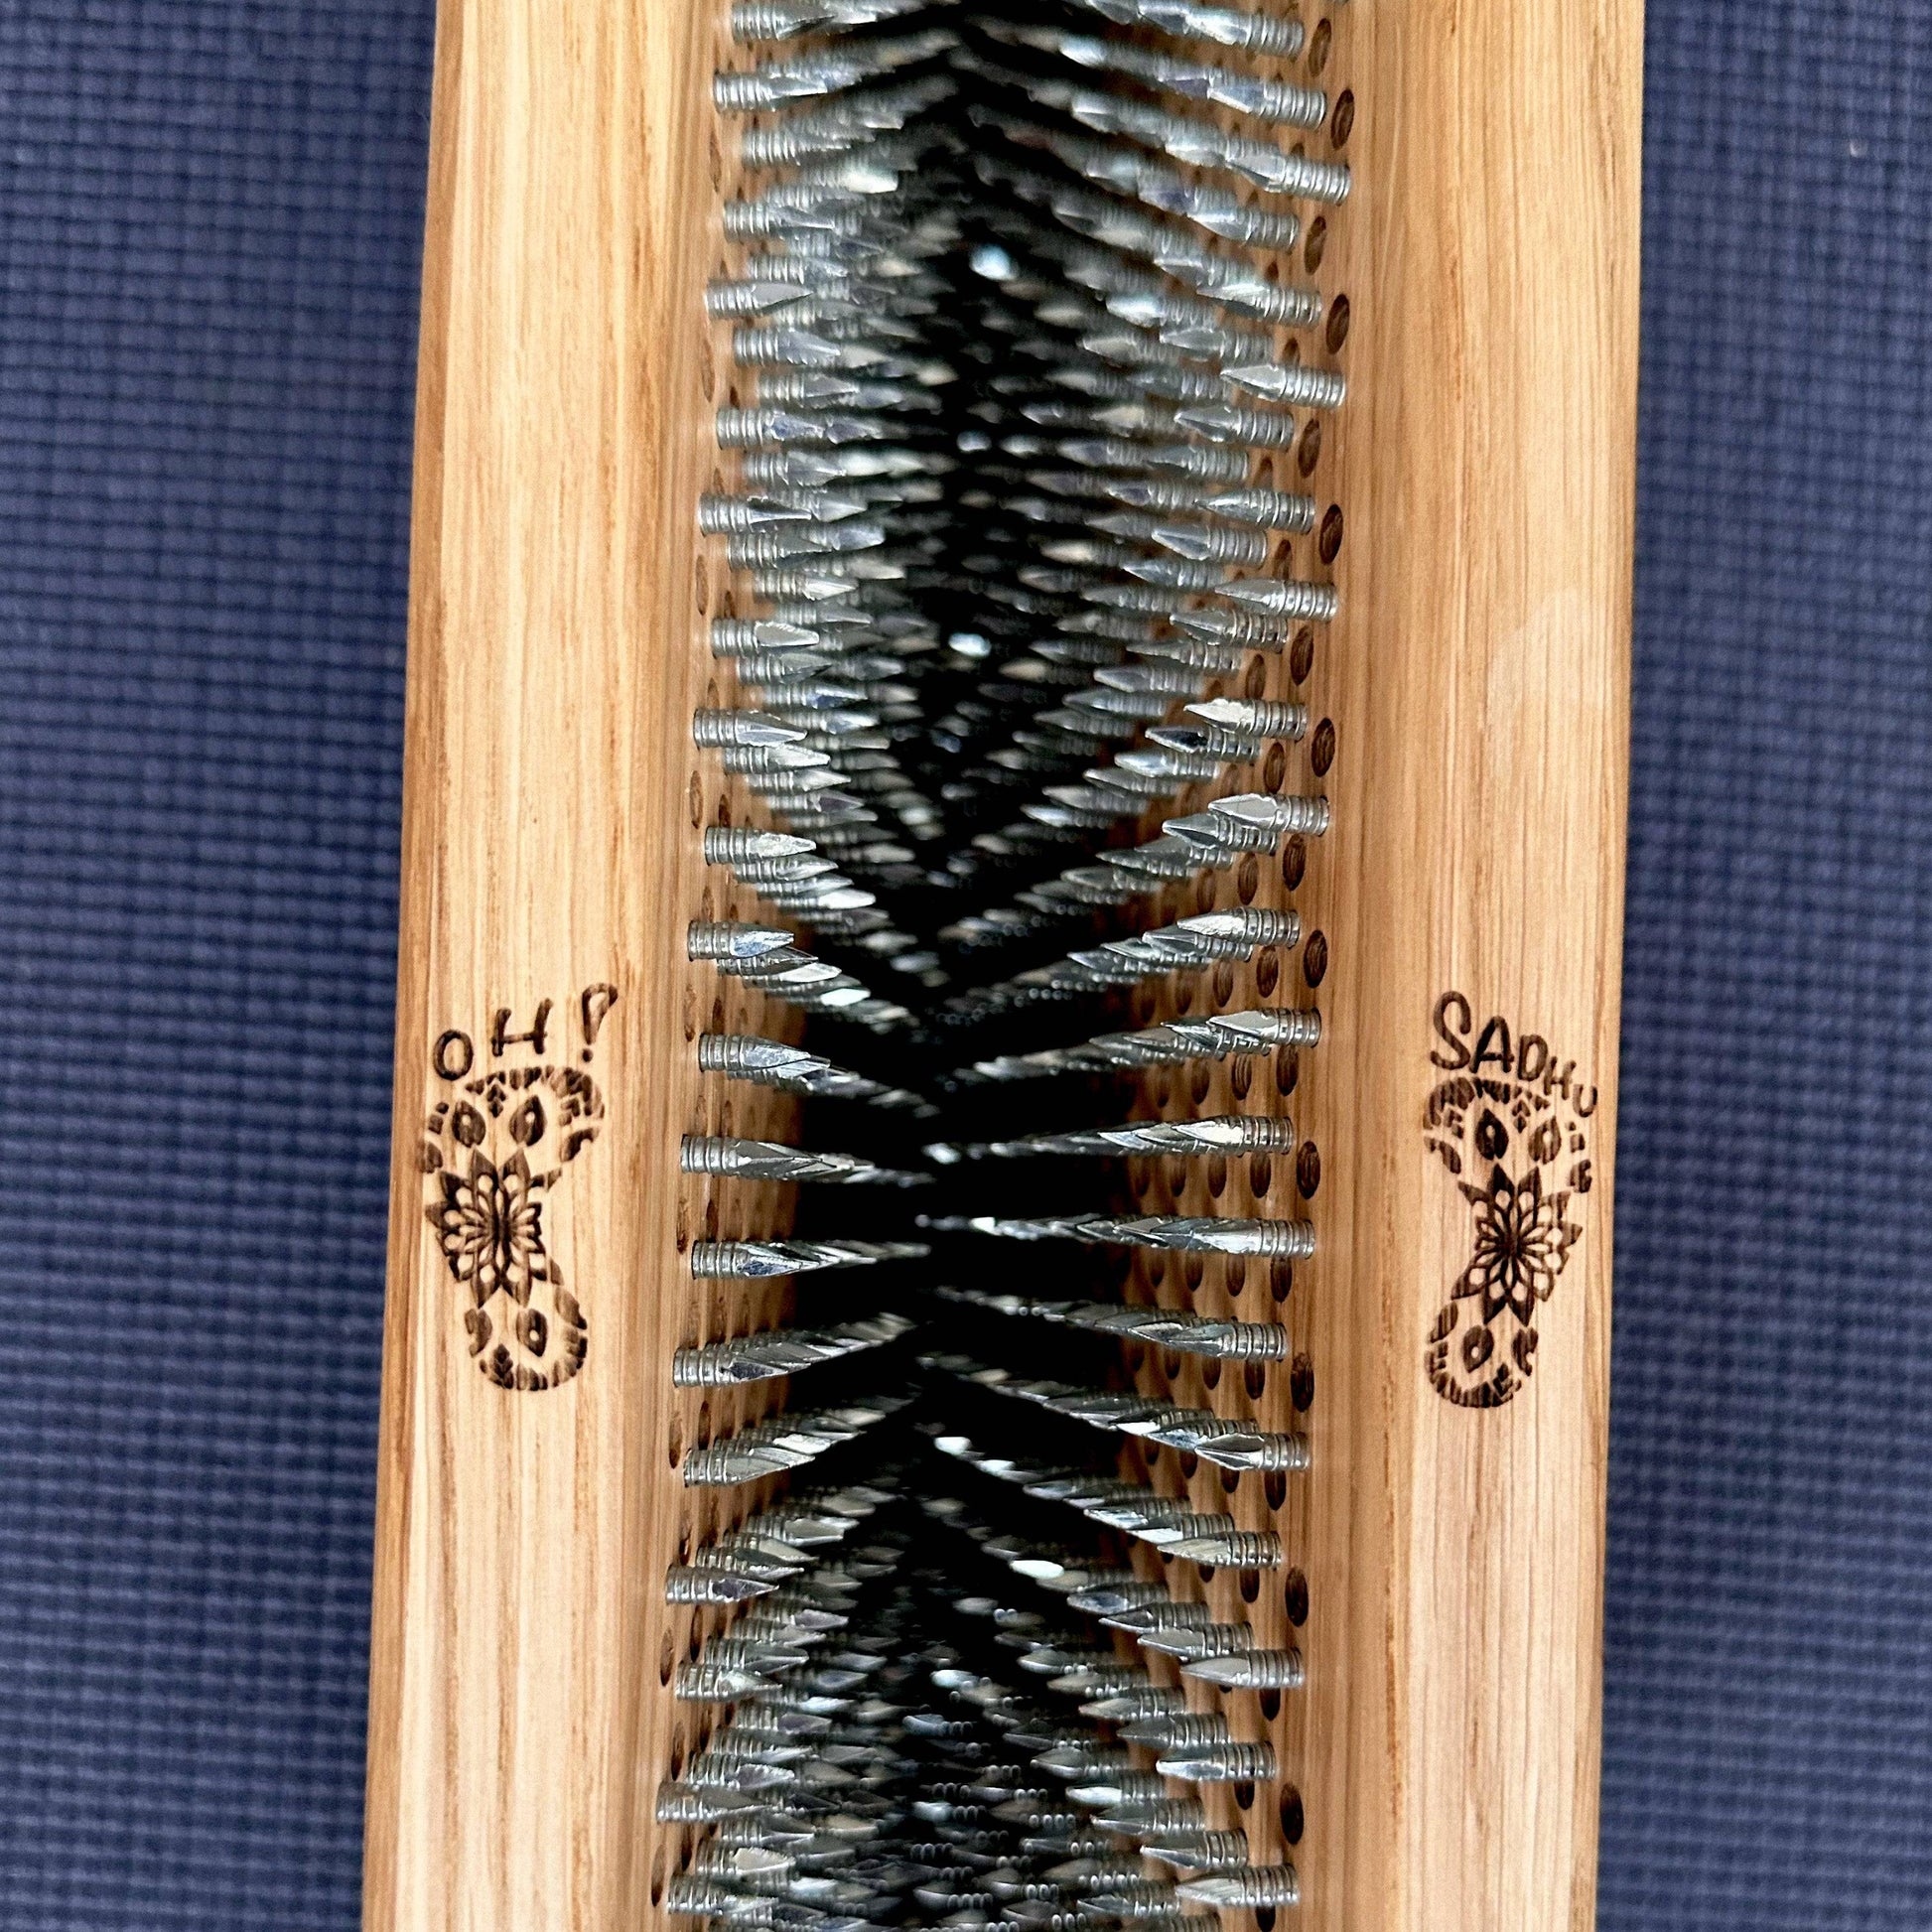 logo on oak wood sadhu board with nails